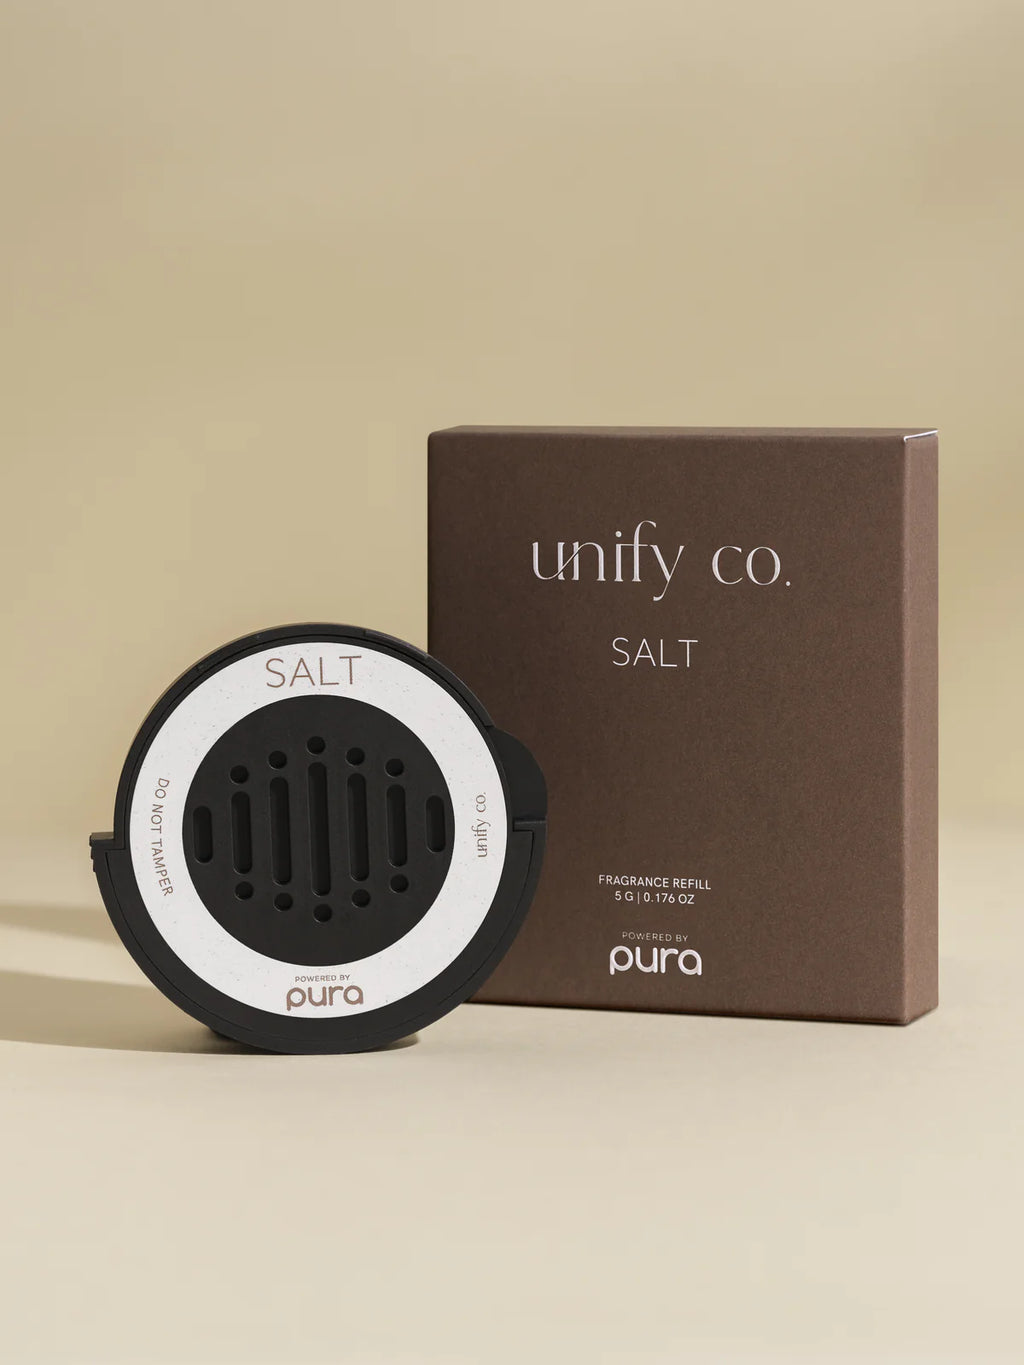 Pura Unify Co. Salt car diffuser scent refill